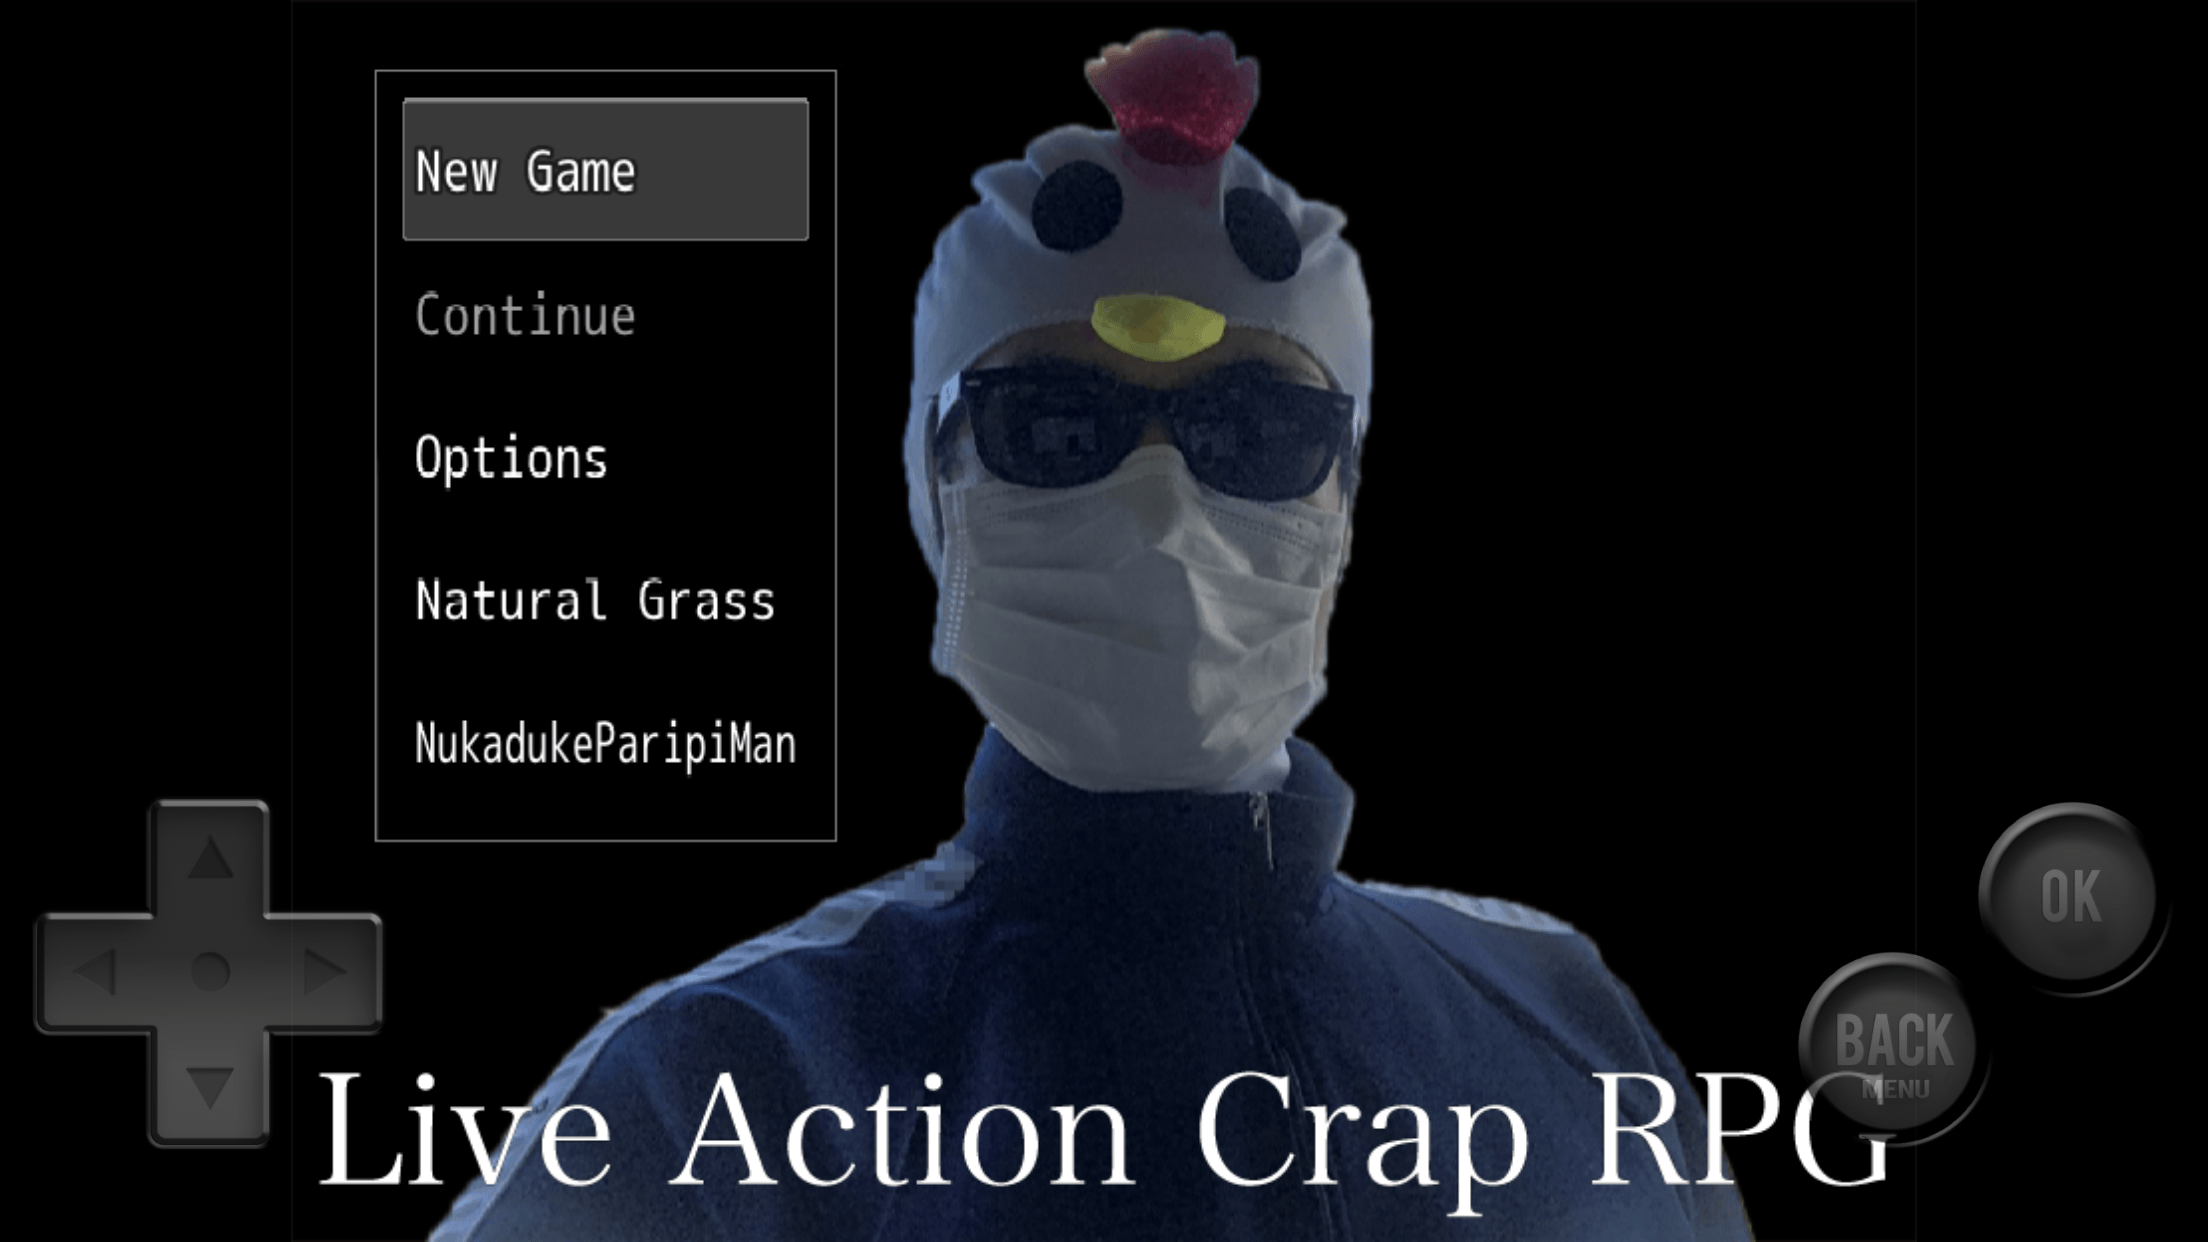 Live Action Crap RPG